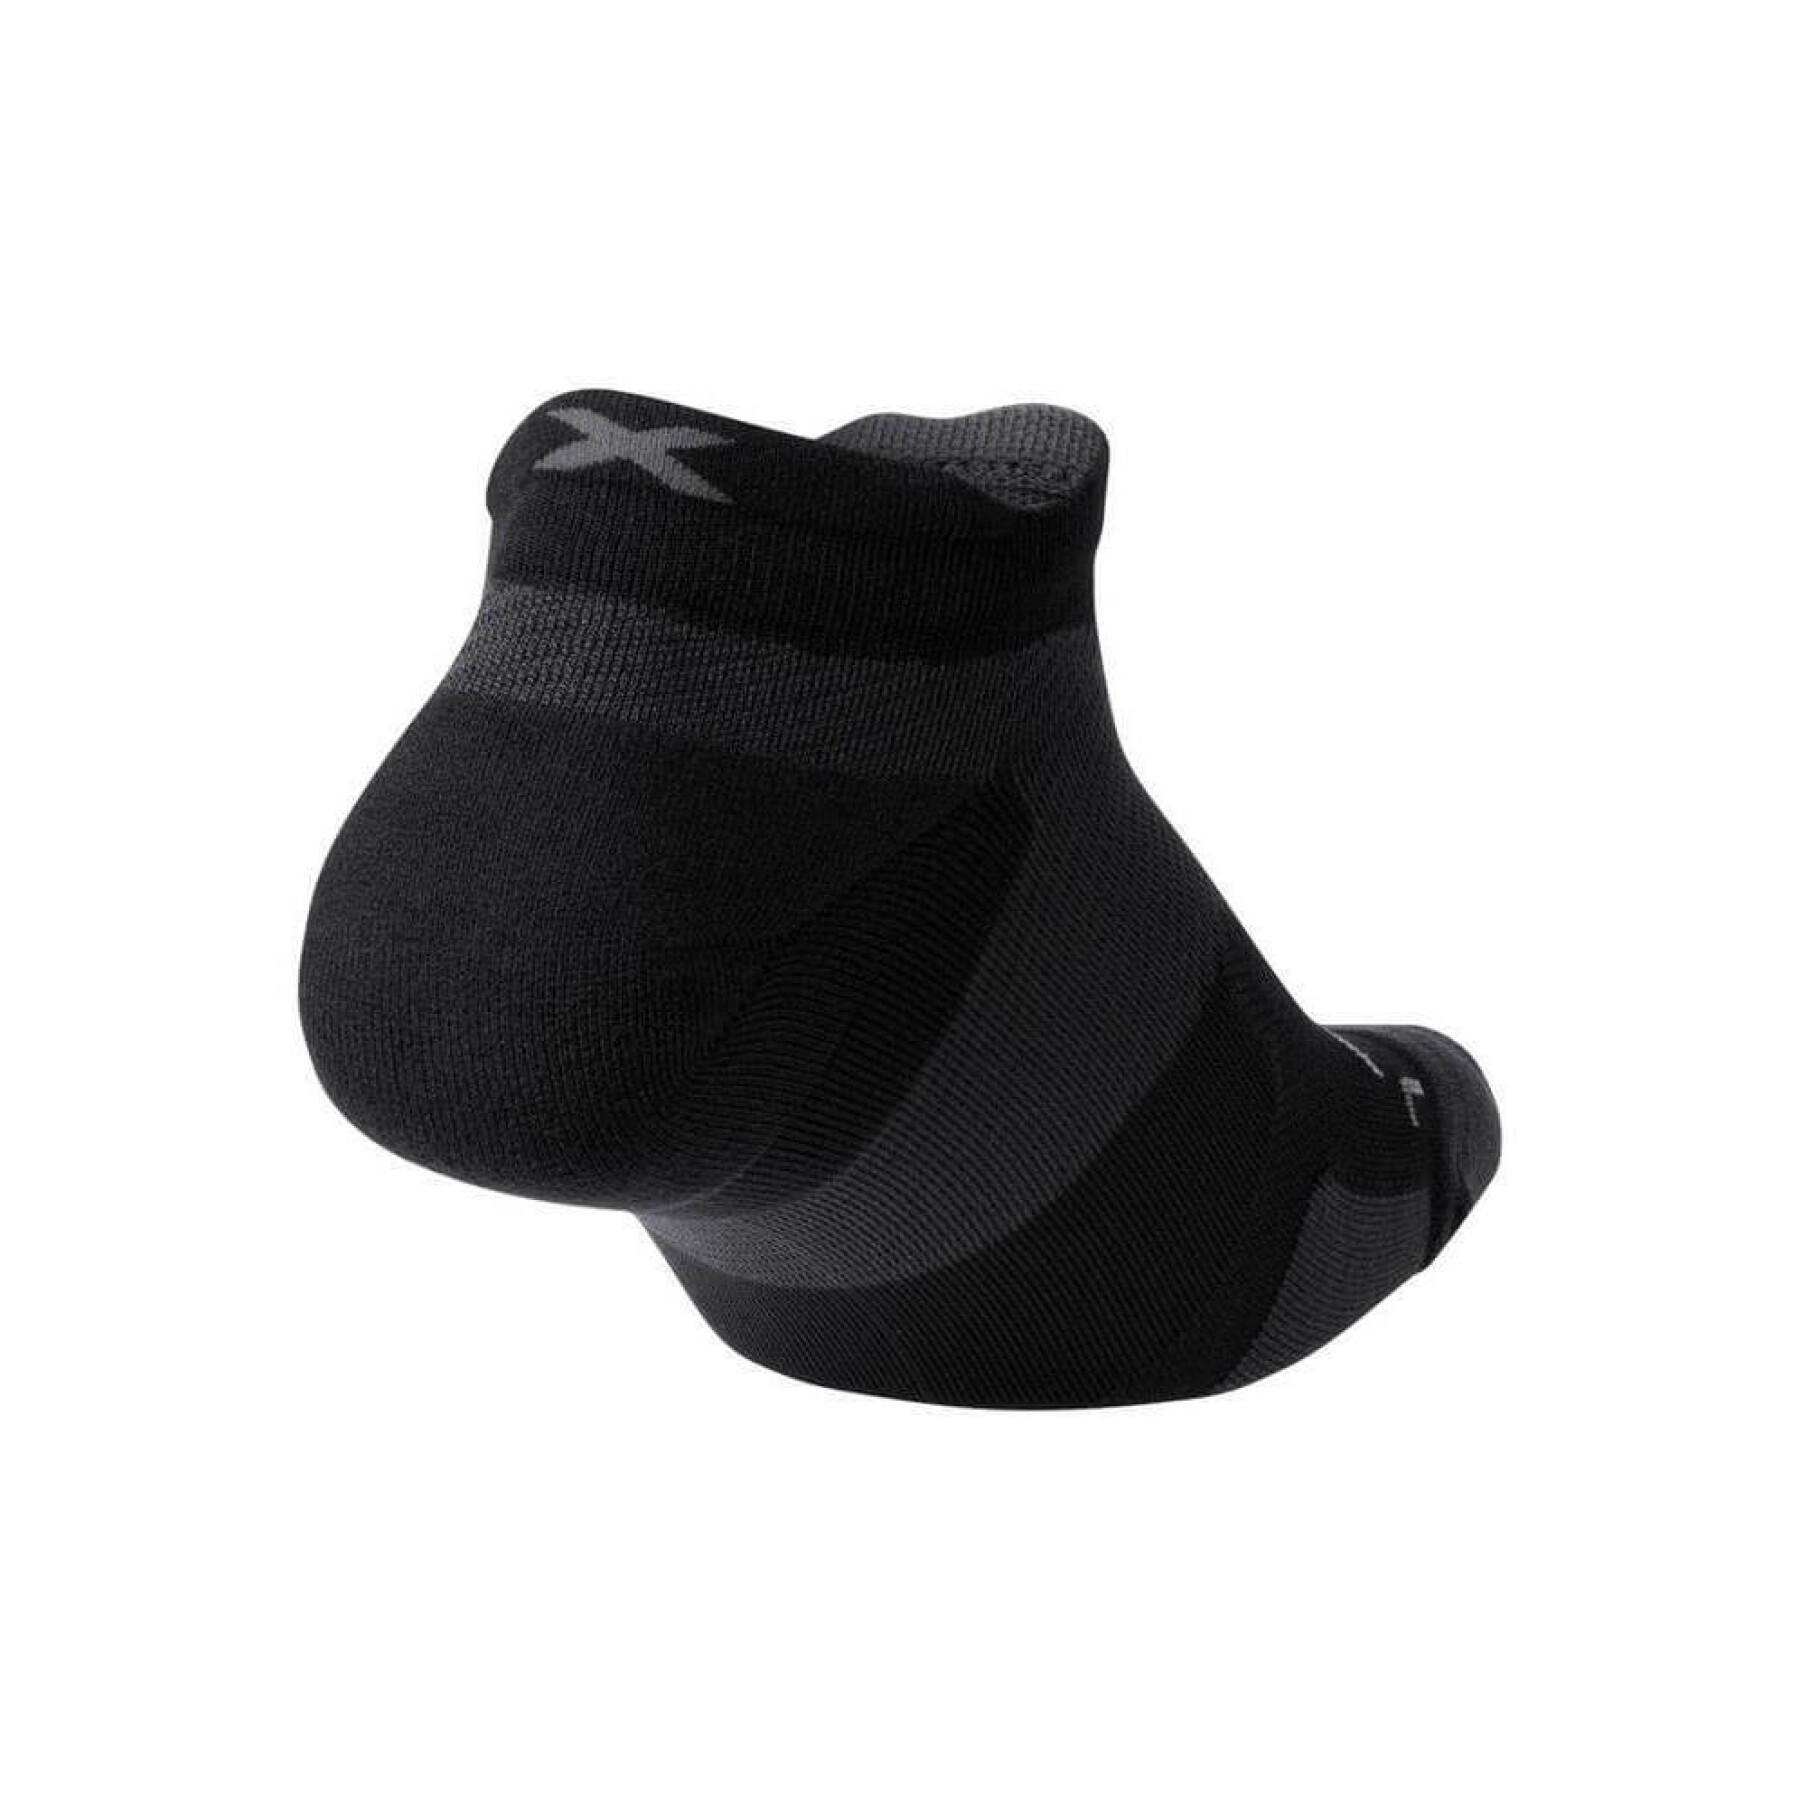 Onzichtbare sokken 2XU Vectr LightCushion